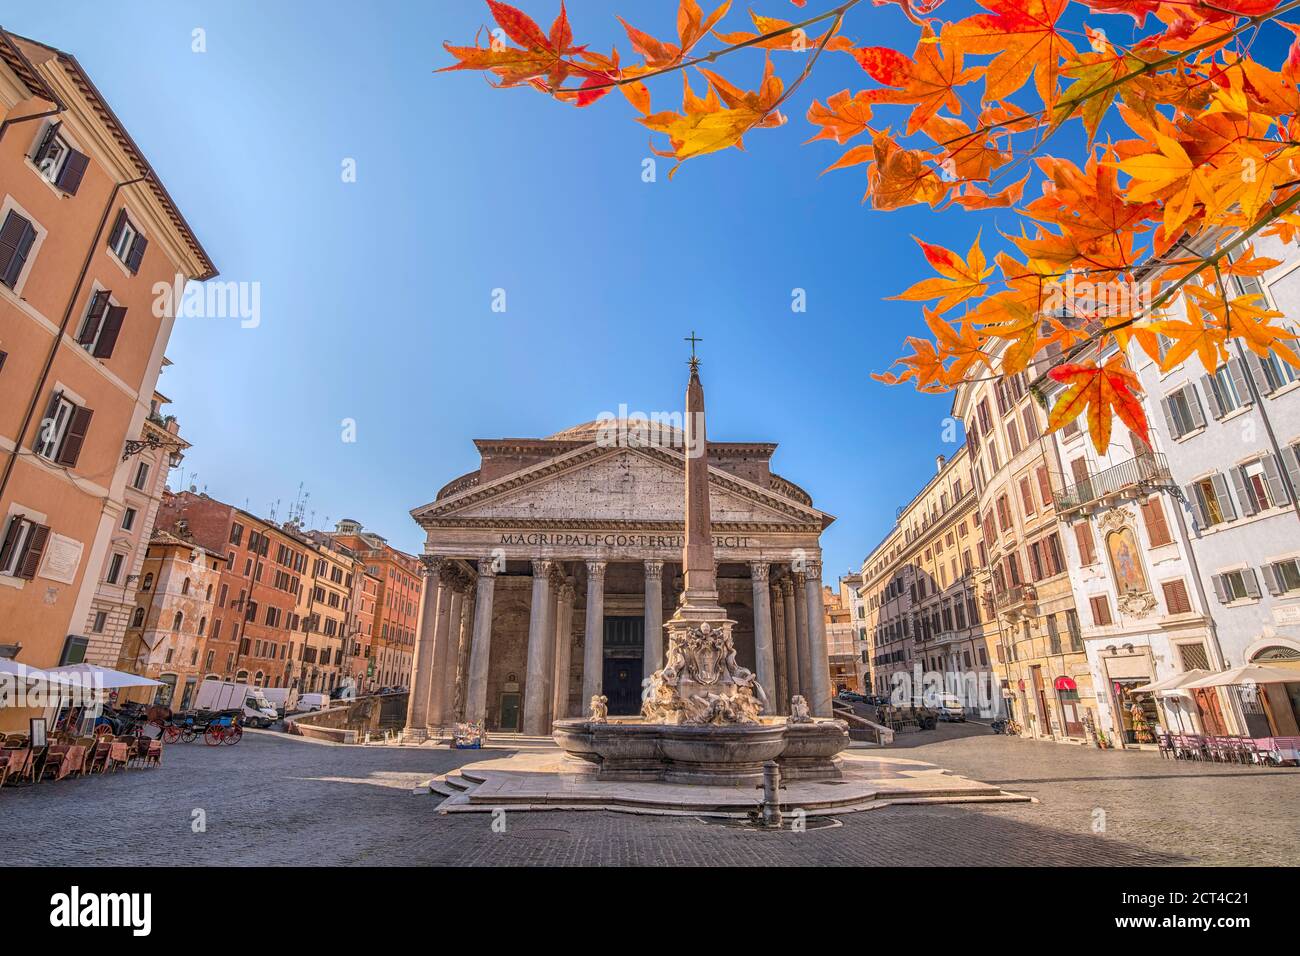 Rome Italy, city skyline at Rome Pantheon Piazza della Rotonda  with autumn leaf foliage Stock Photo